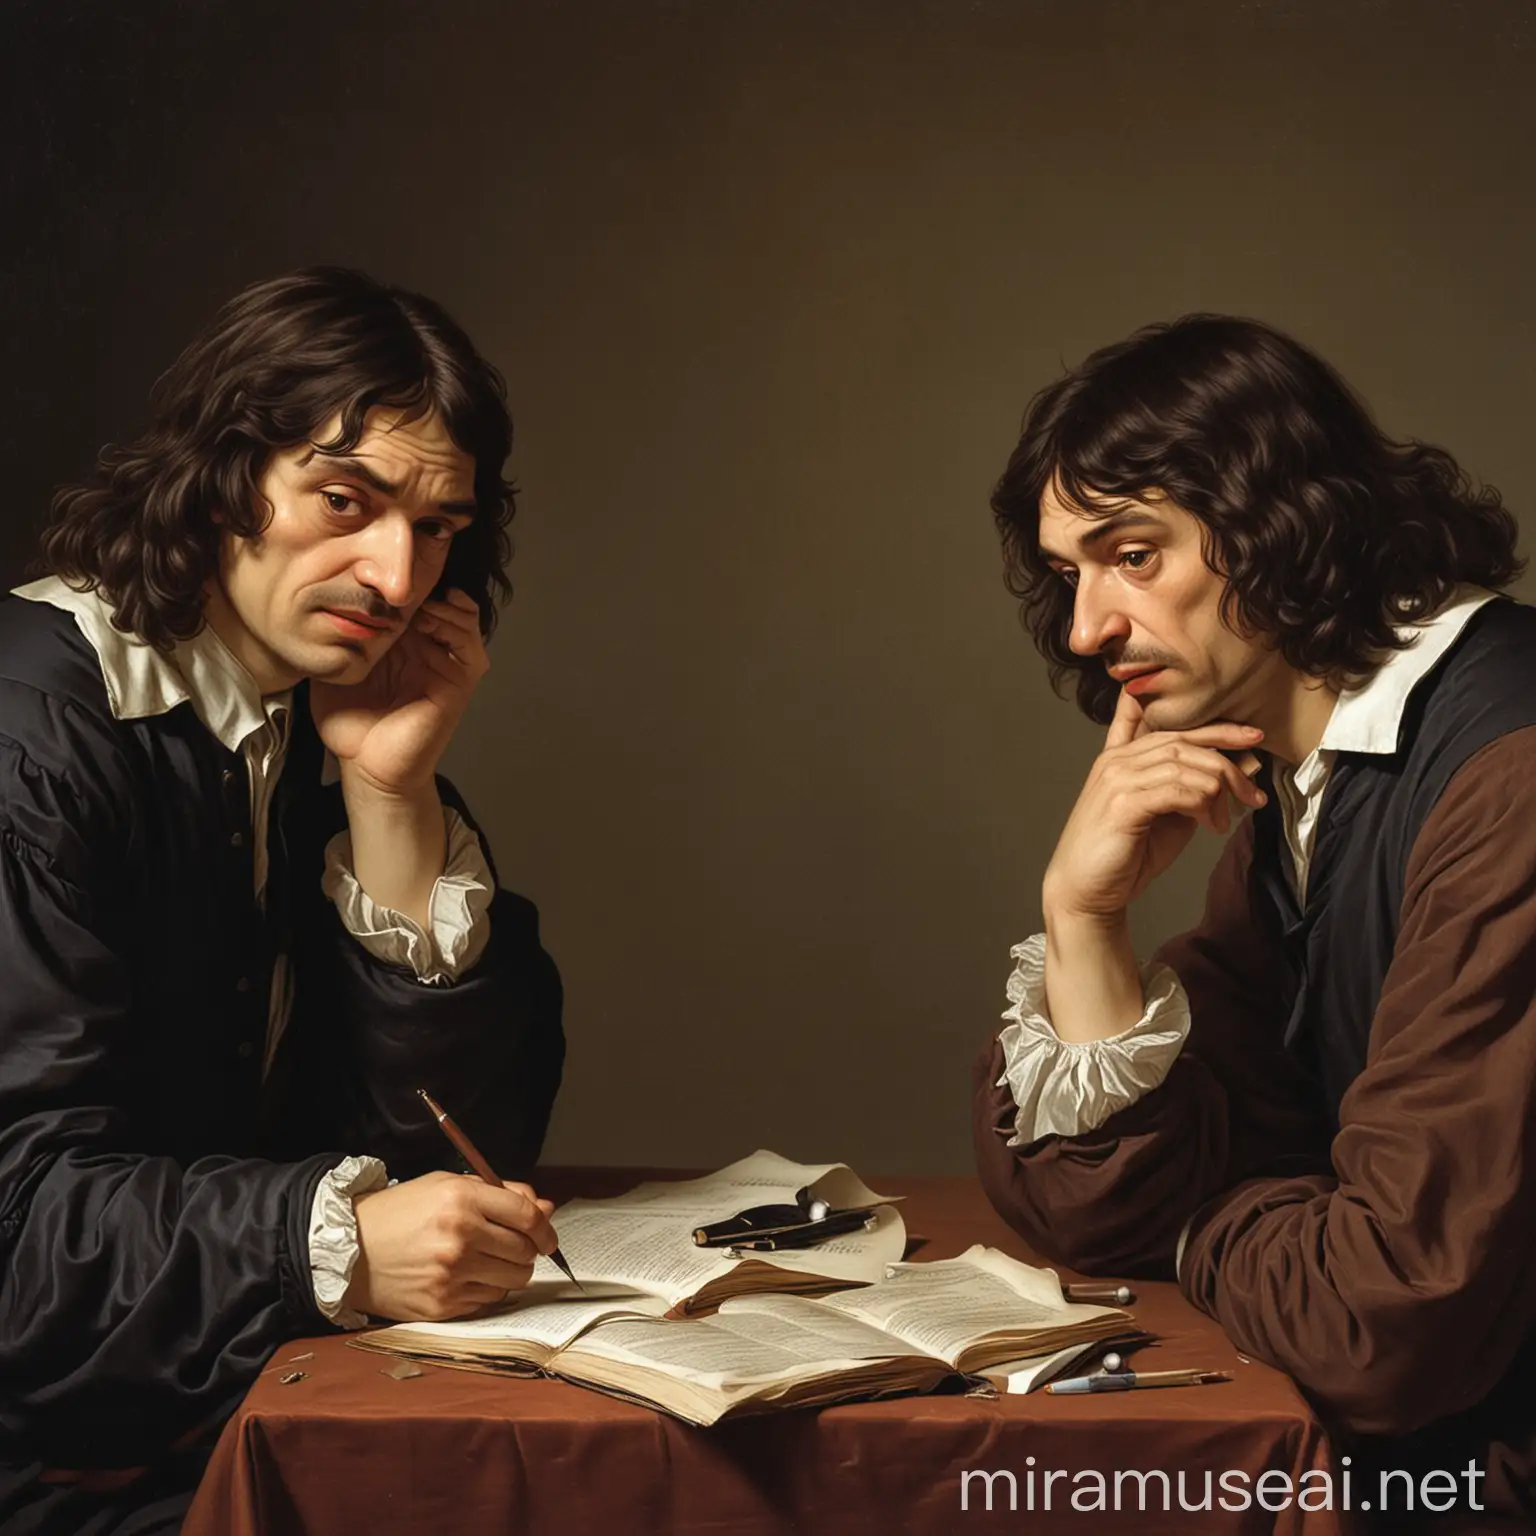 Philosopher Descartes in Mutual Doubt